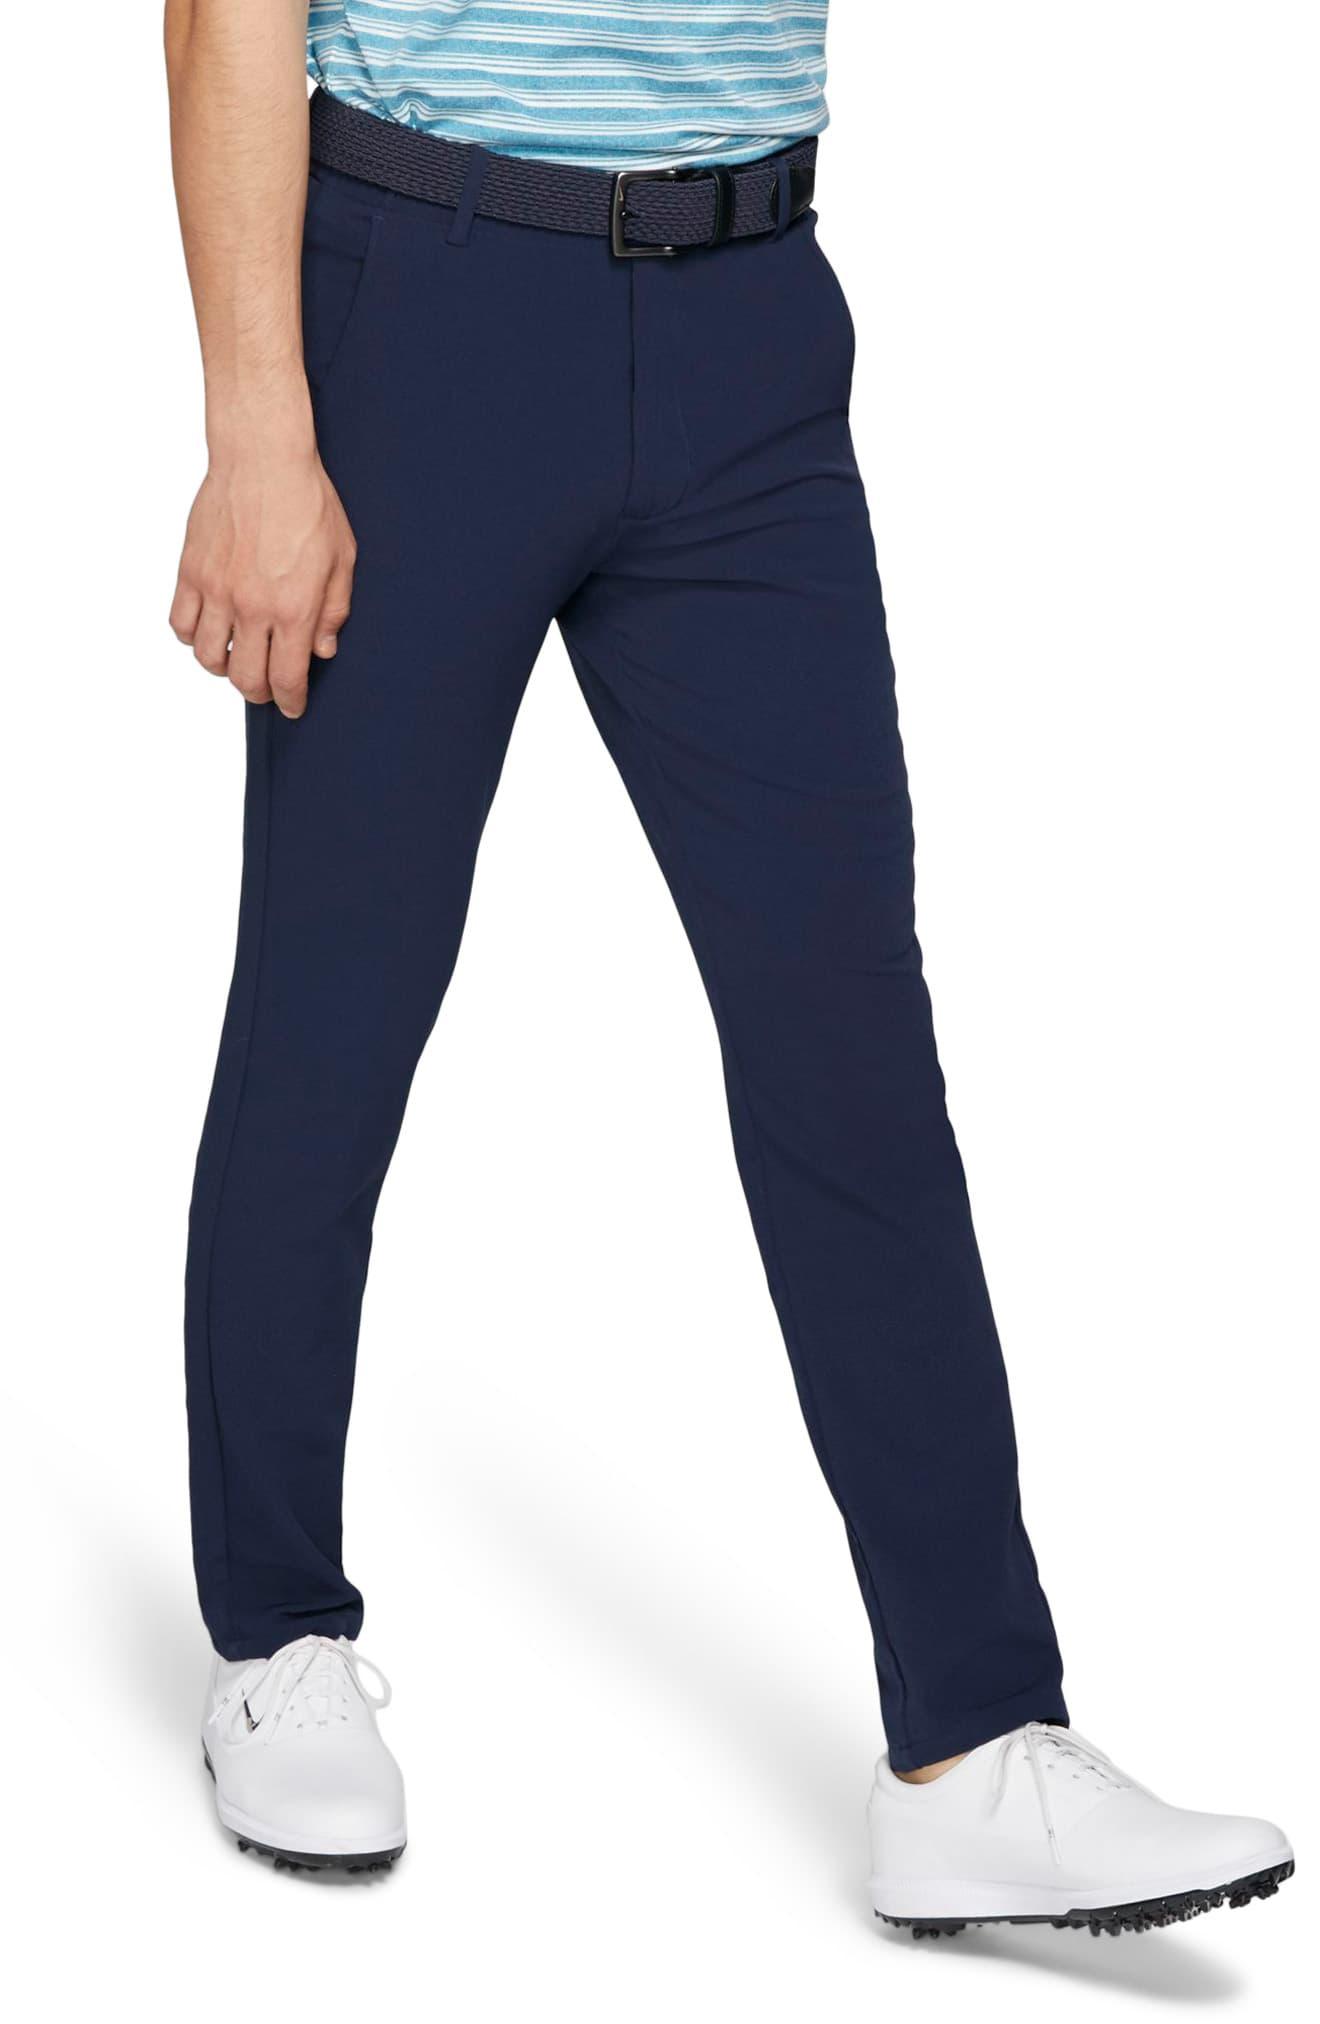 Nike Synthetic Flex Vapor Slim Fit Golf Pants in Blue for Men - Lyst